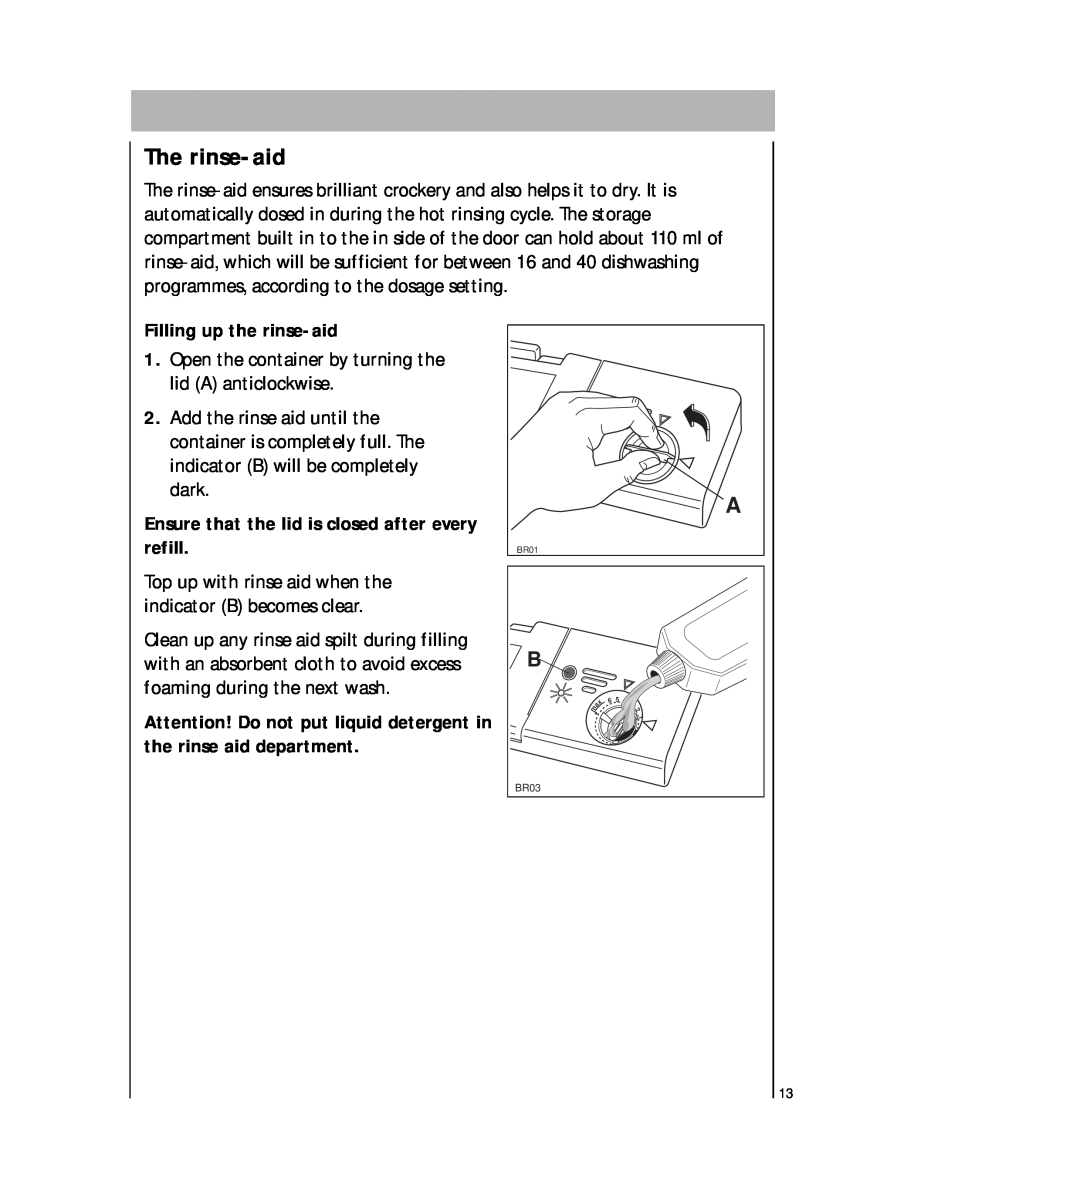 AEG 2807 manual The rinse-aid 